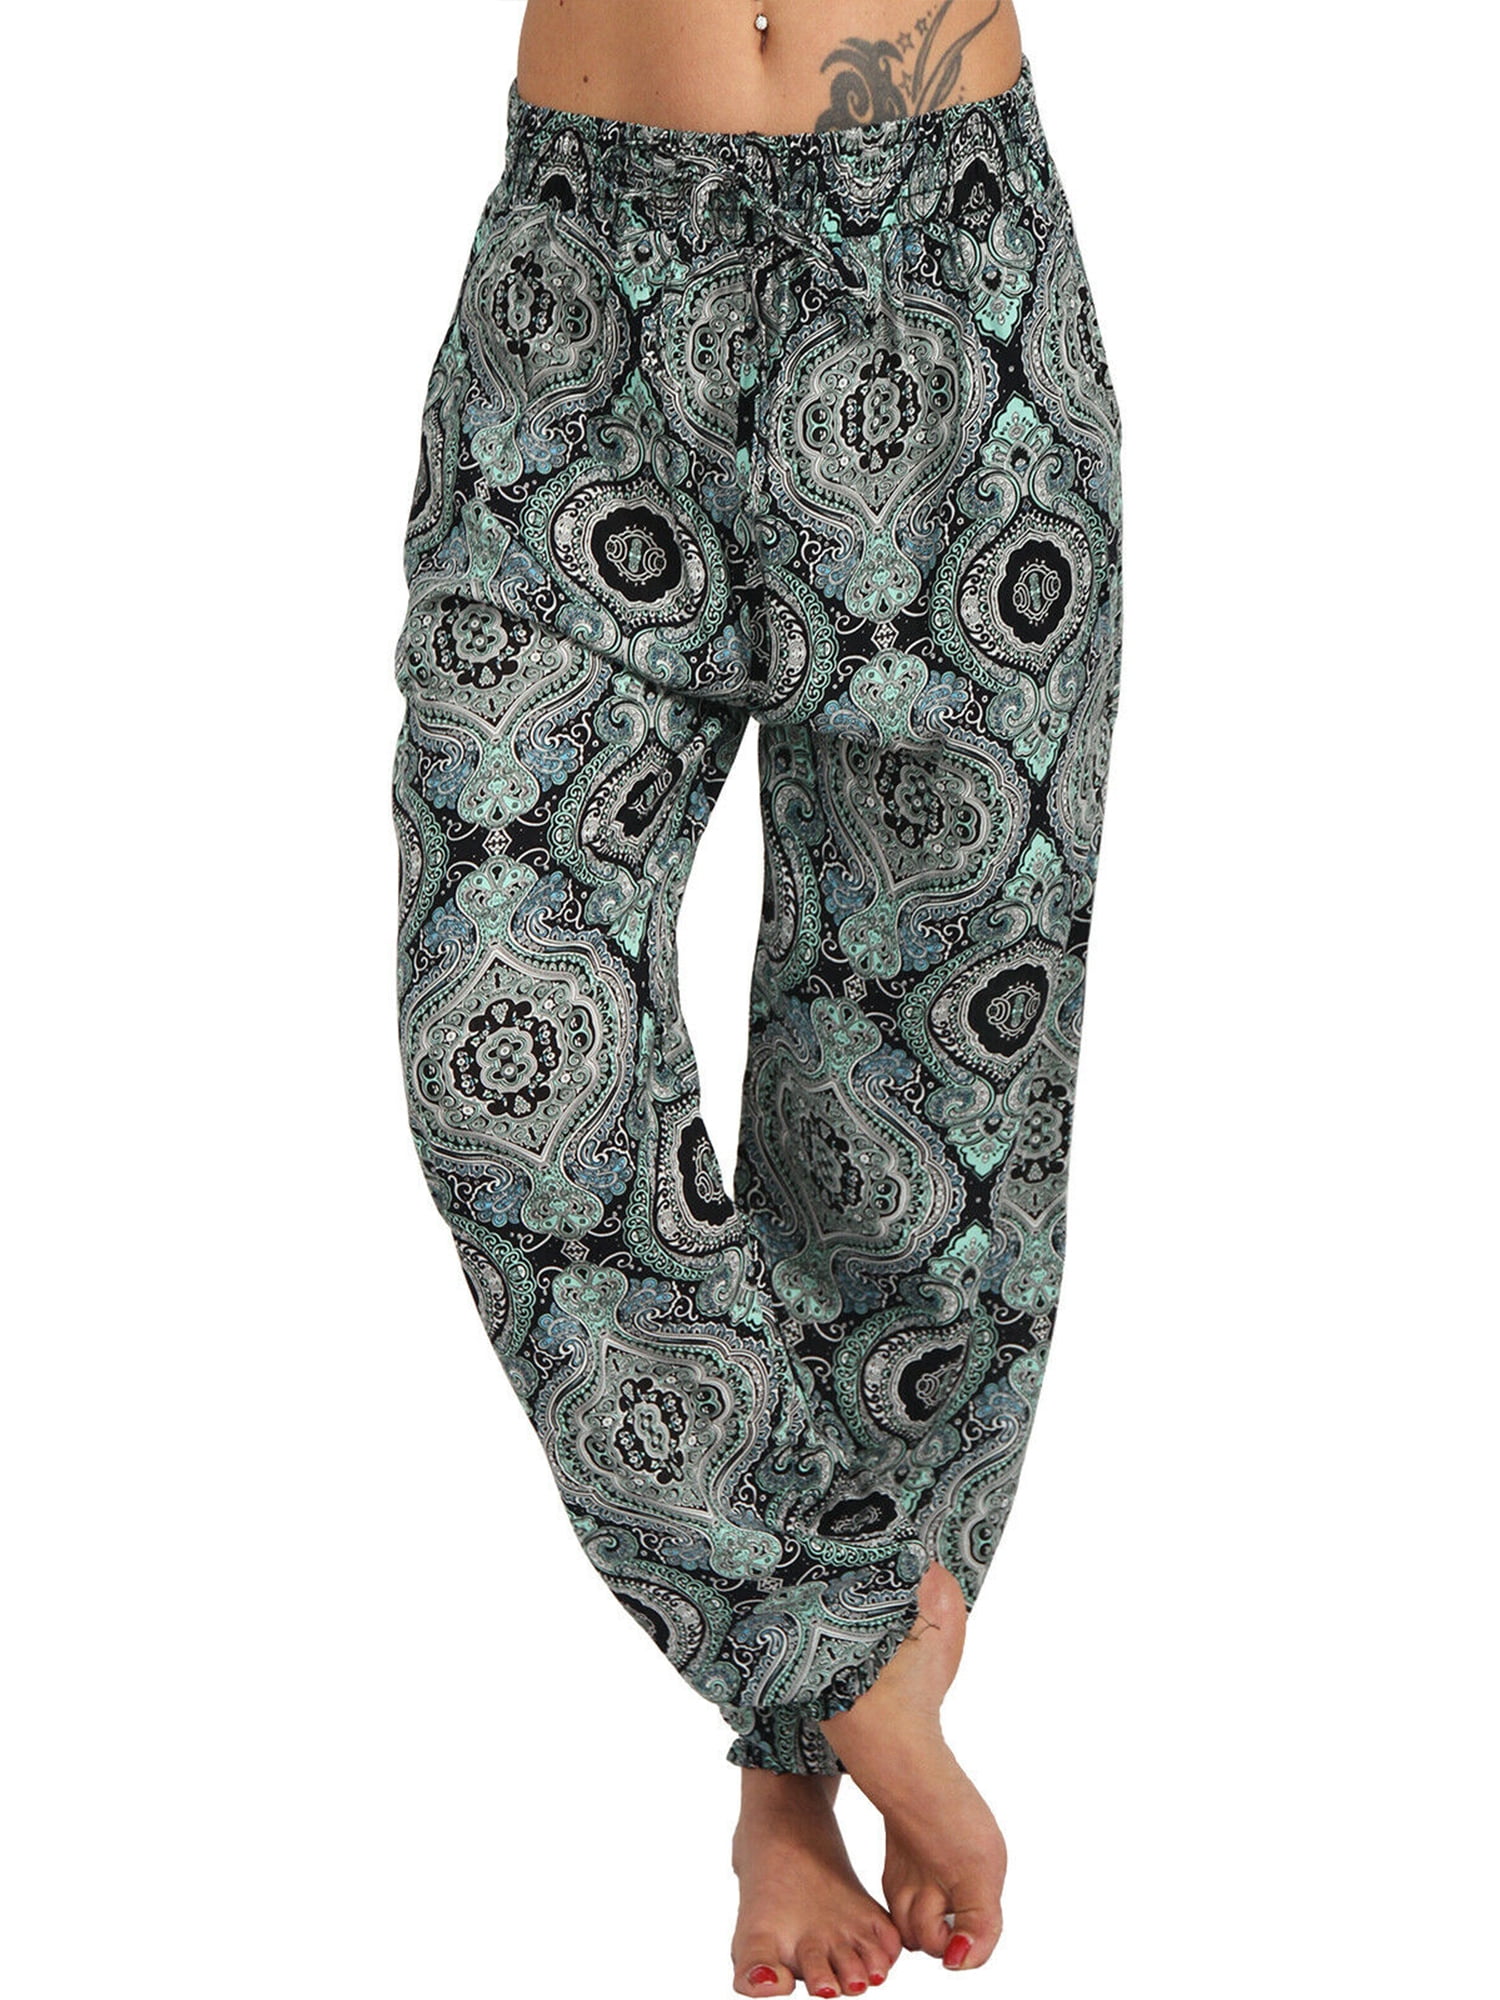 BALEAF Womens Harem Pants Lightweight Pajamas Loose High Waisted Jogger Boho Meditation Workout Dance Yoga Pockets 